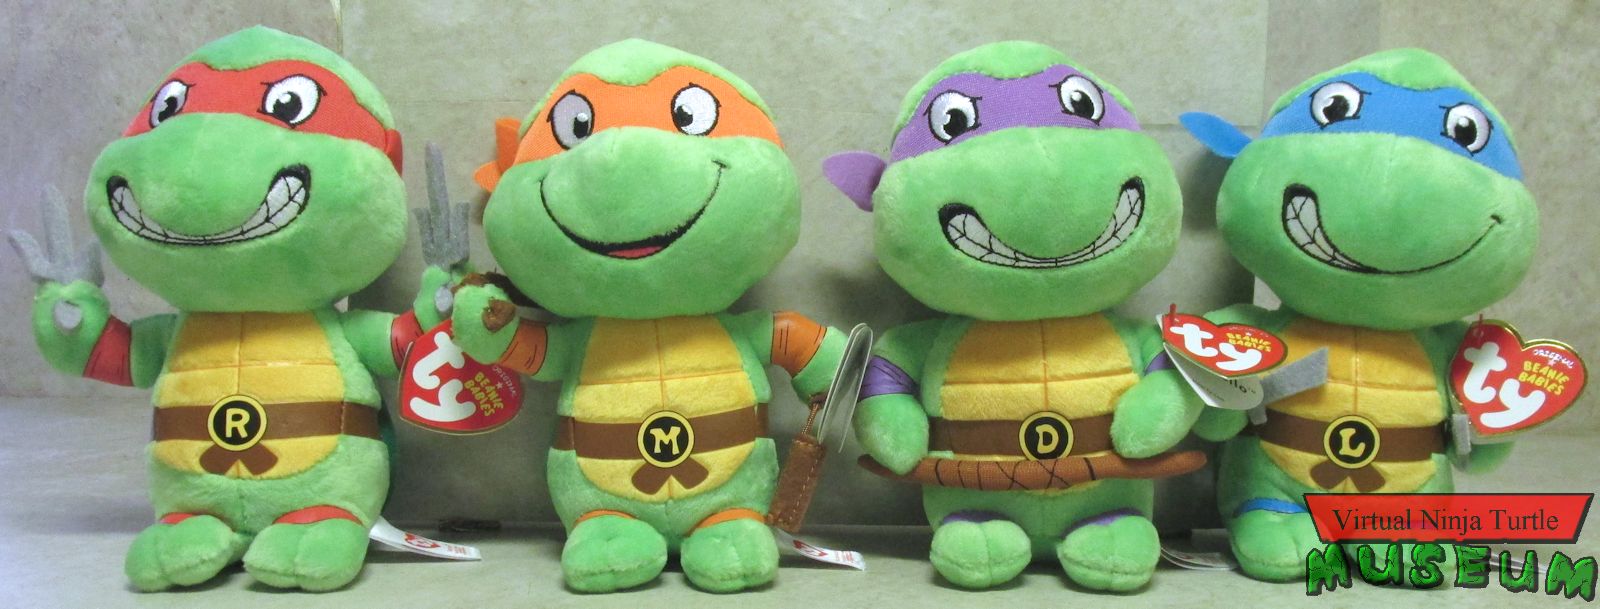 ty beanie babies ninja turtles